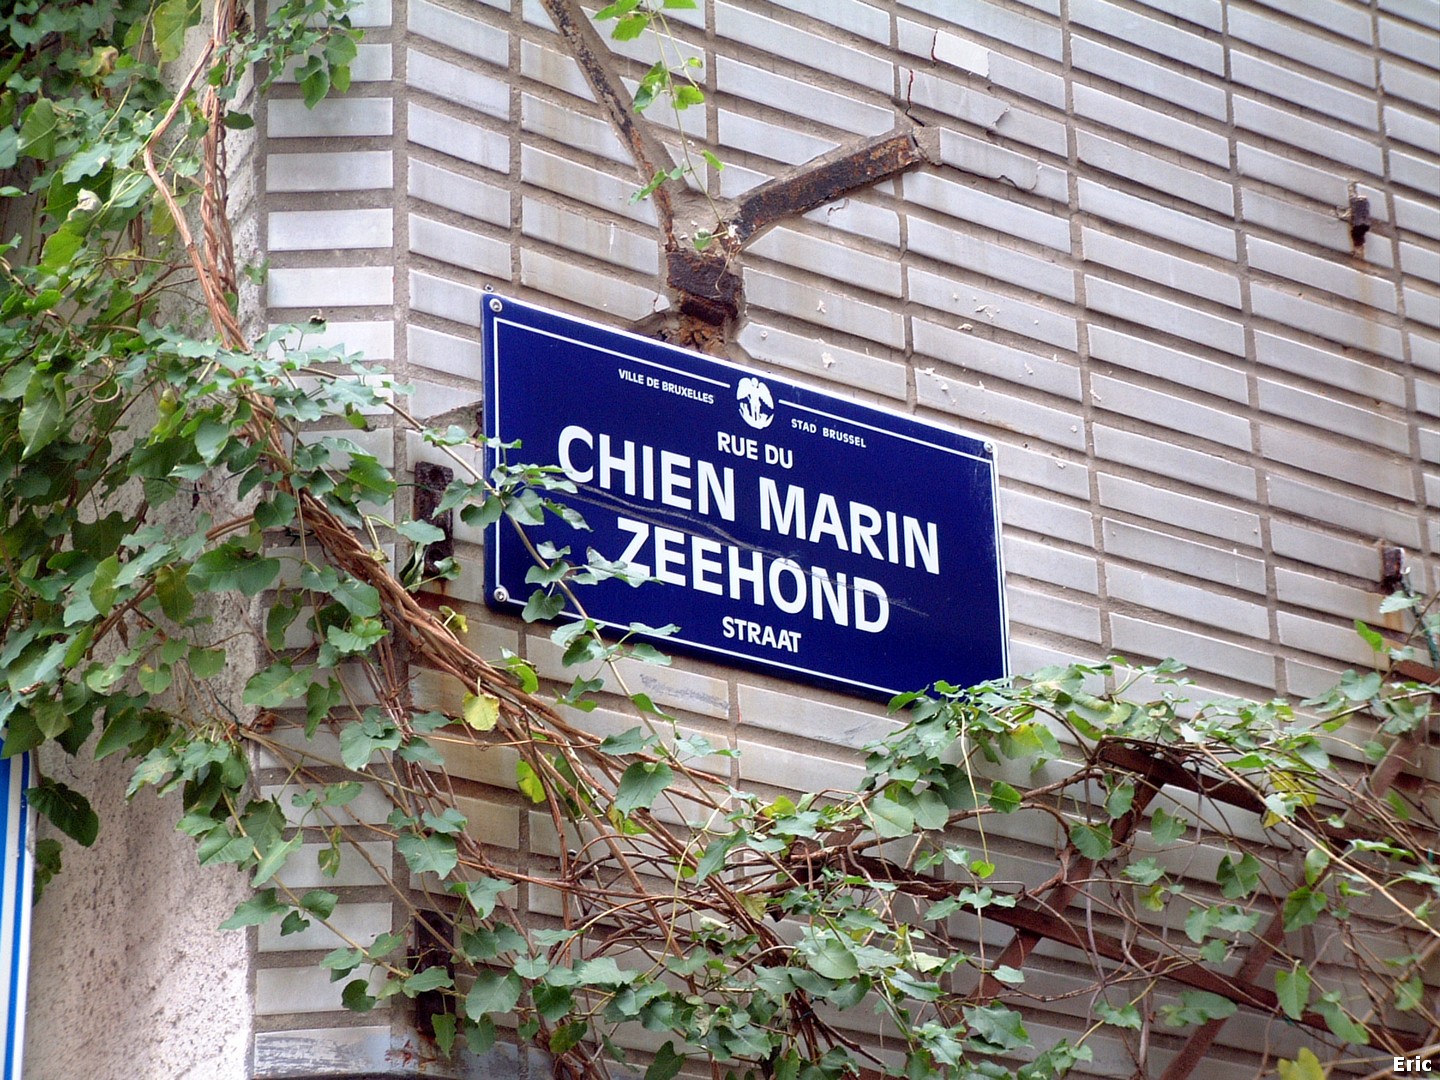 Rue du Chien Marin